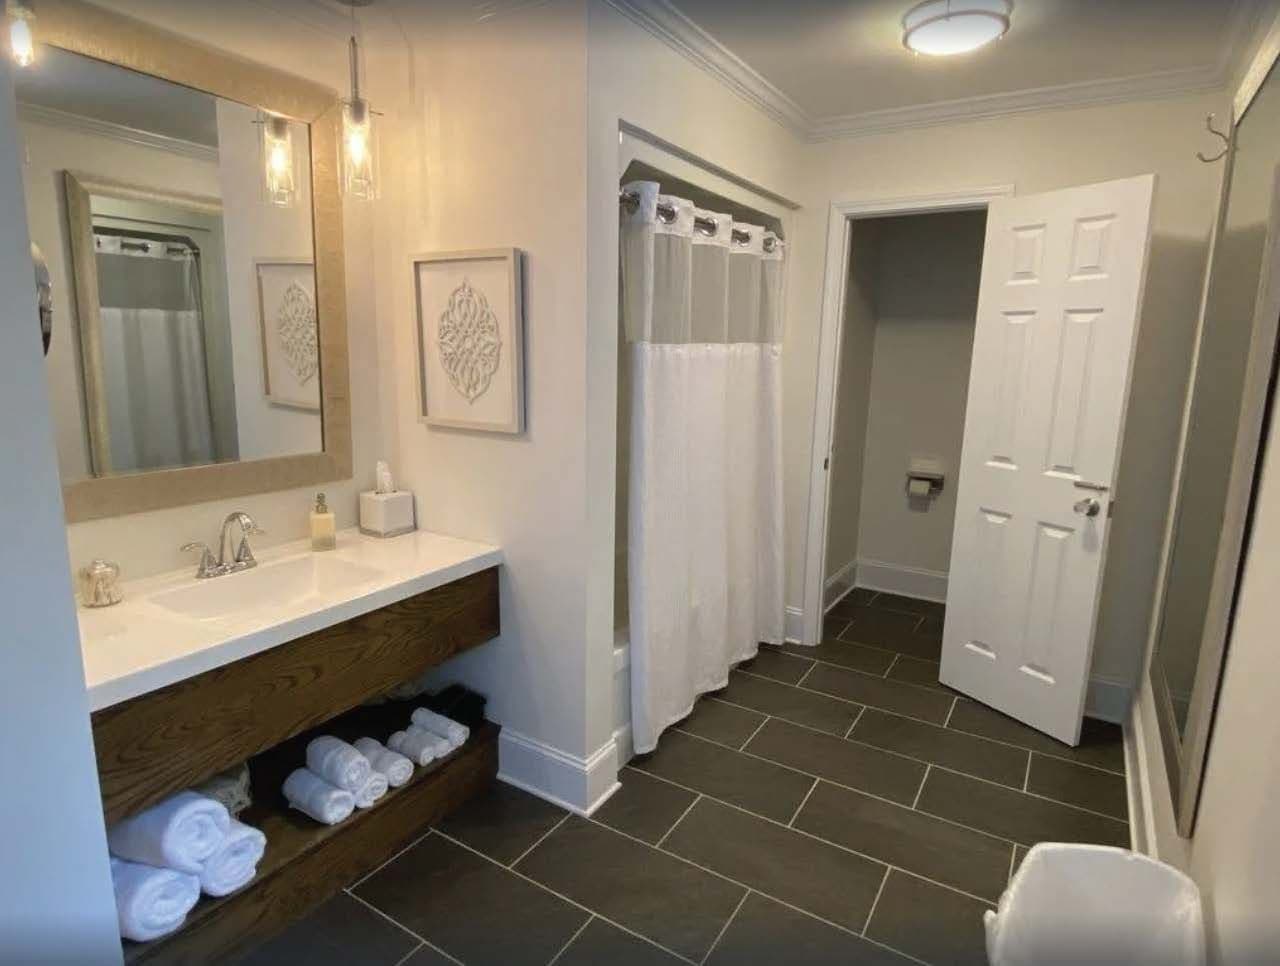 Upstairs Master EnSuite Bathroom - Sink, Shower/Bath, & A Toilet.